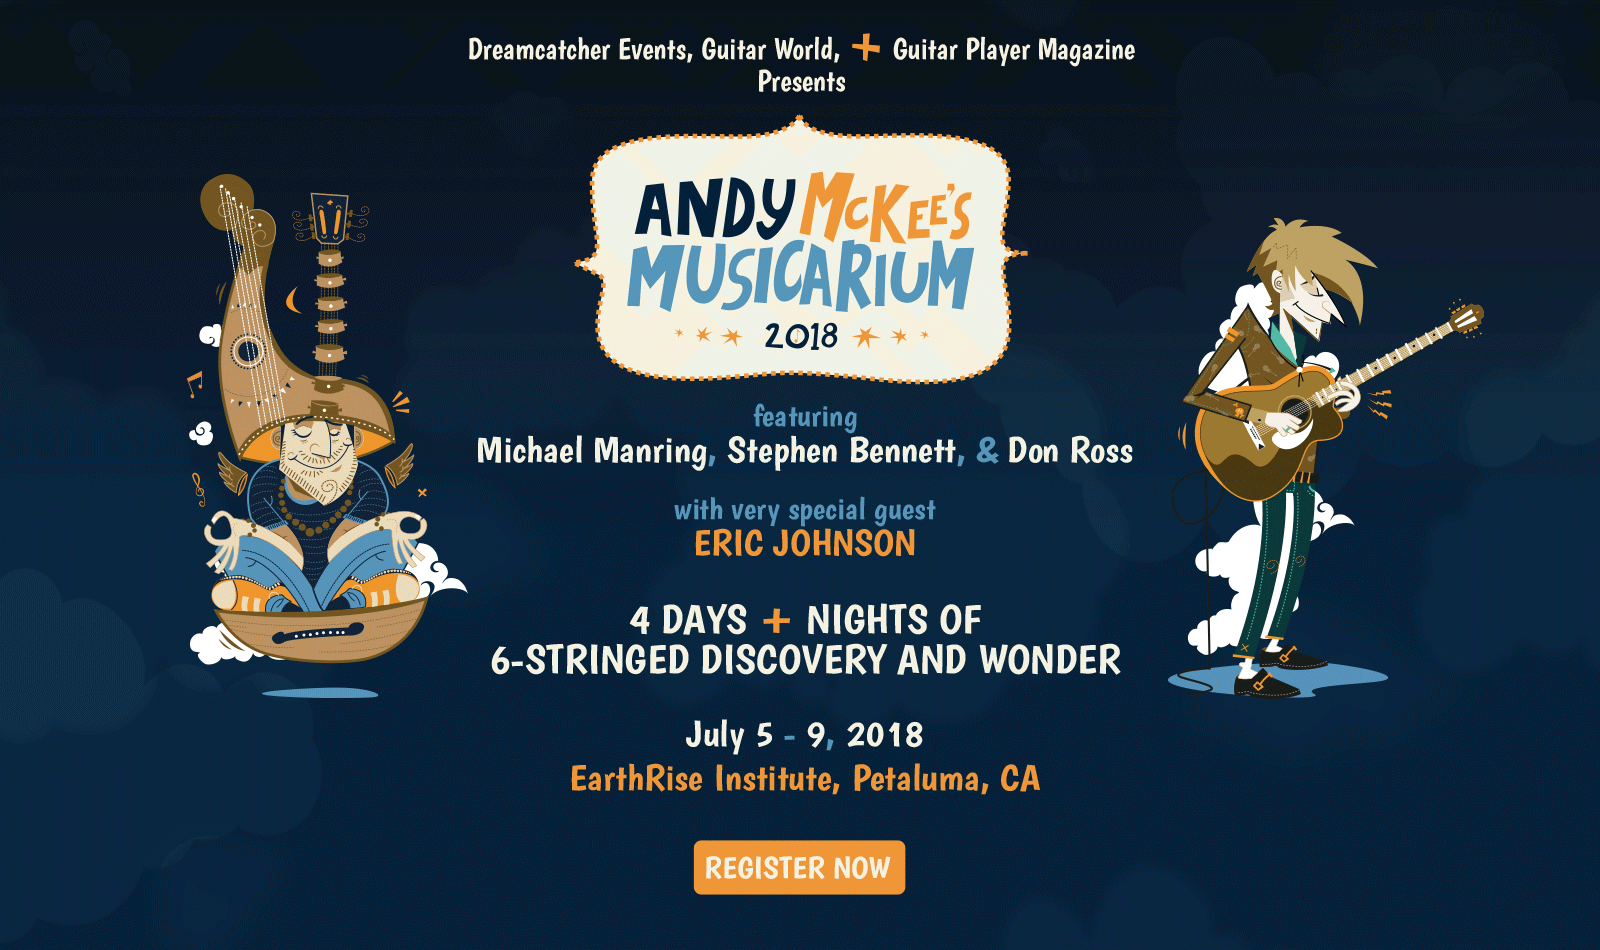 Andy McKee's Musicarium will take place July 5 - 9, 2018, in Petaluma, CA.